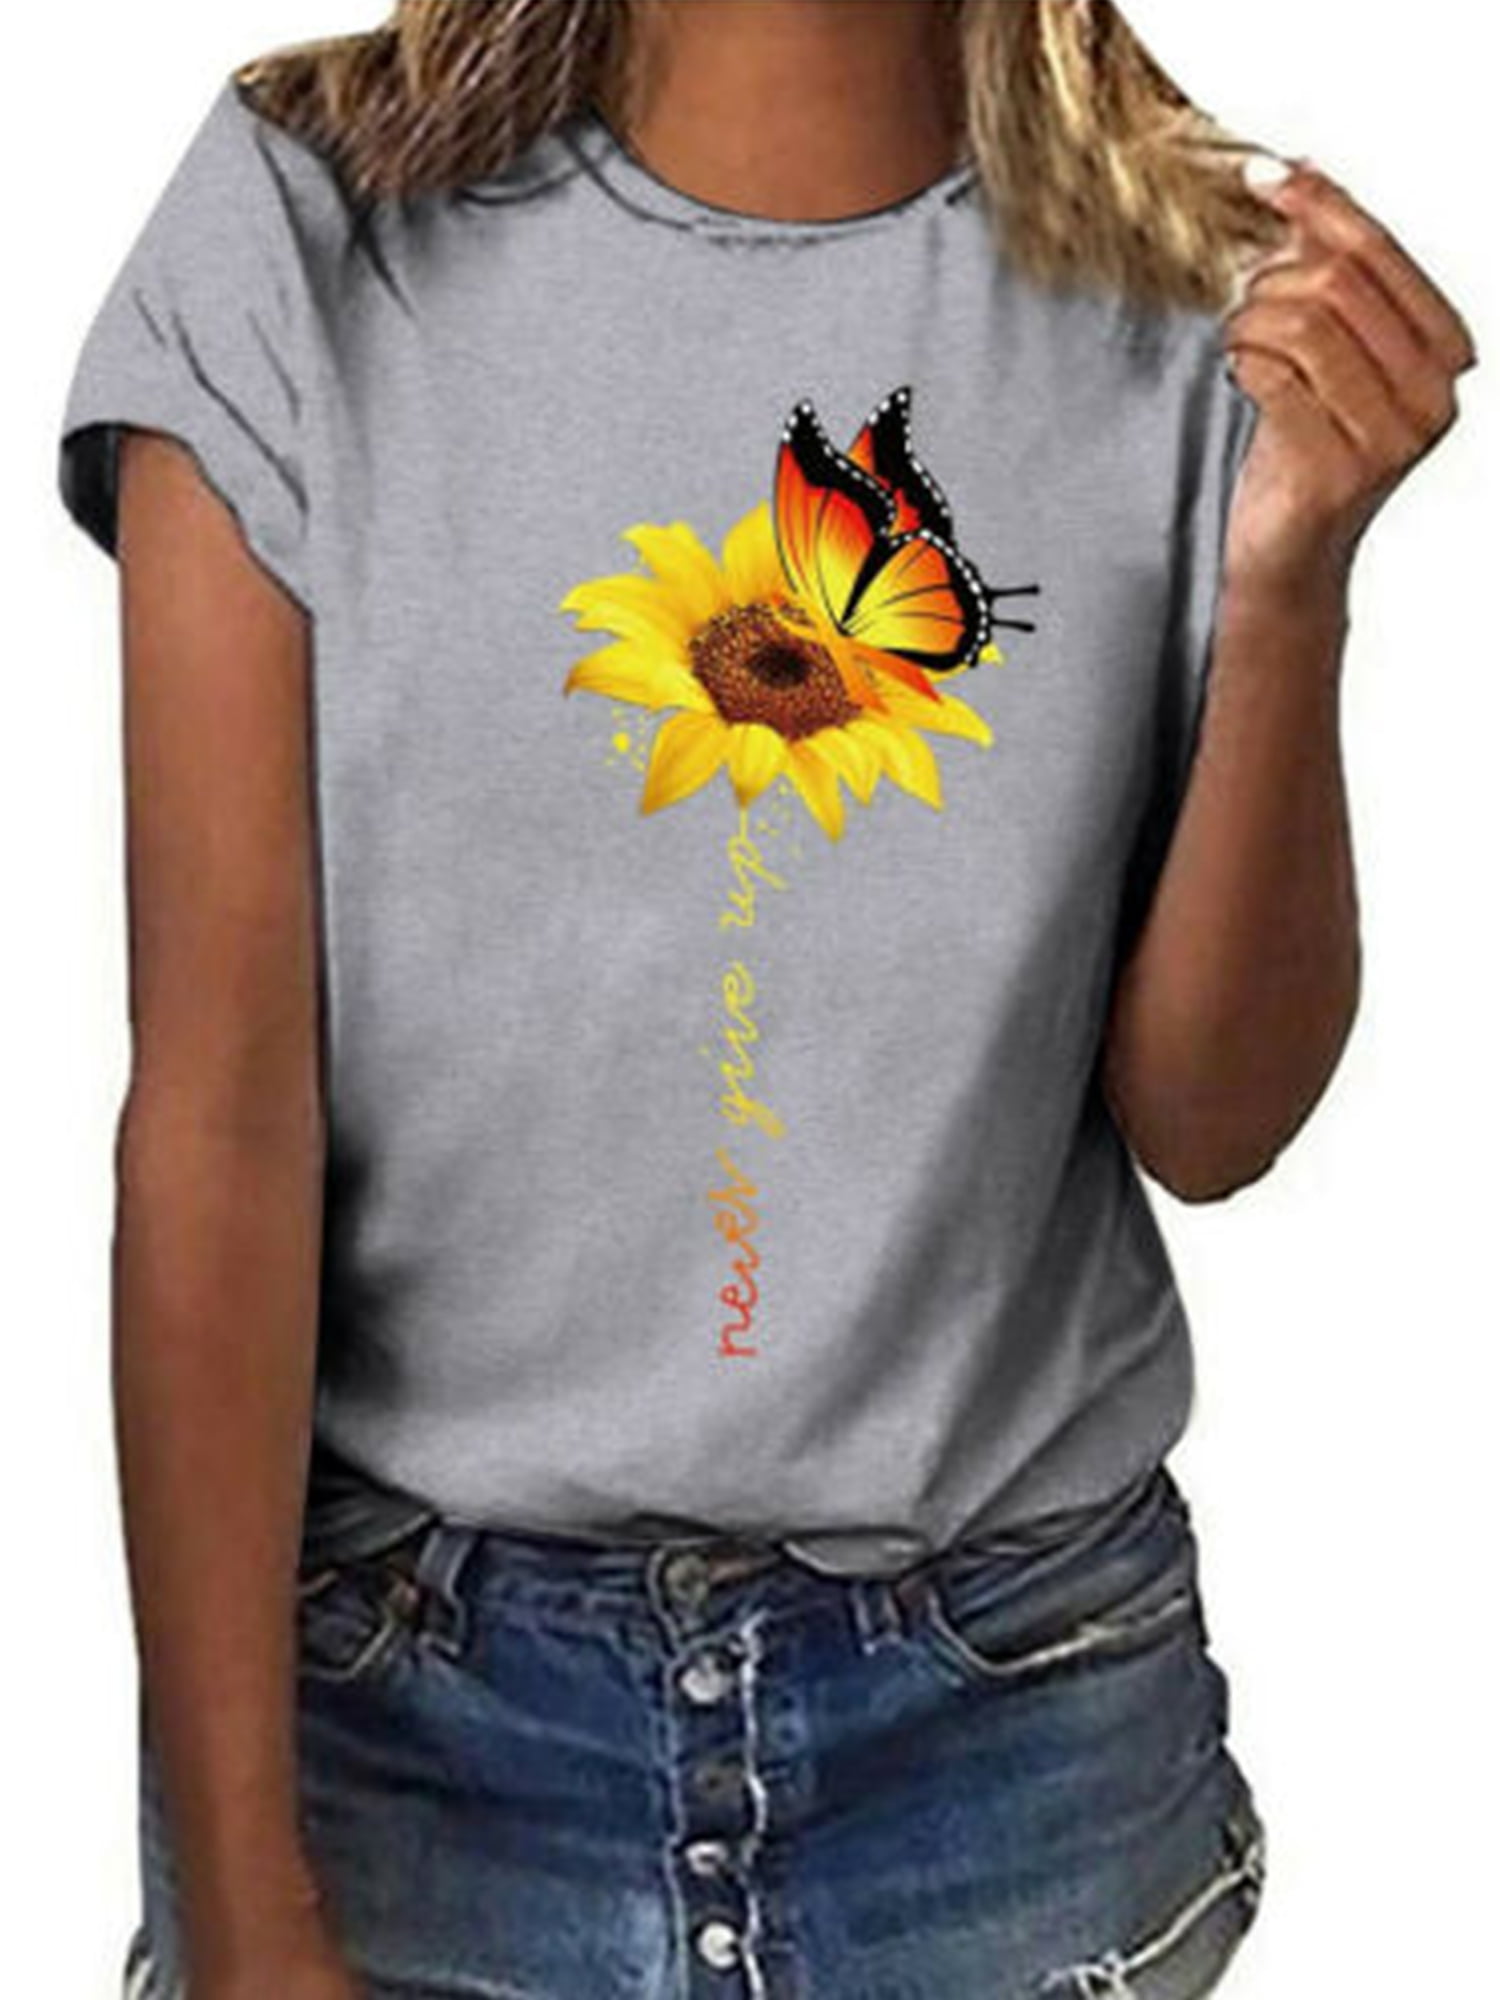 Summer Short Sleeve T Shirt For Women Casual Sunflower Print Top Ladies Bohemian Beach Tee Shirt